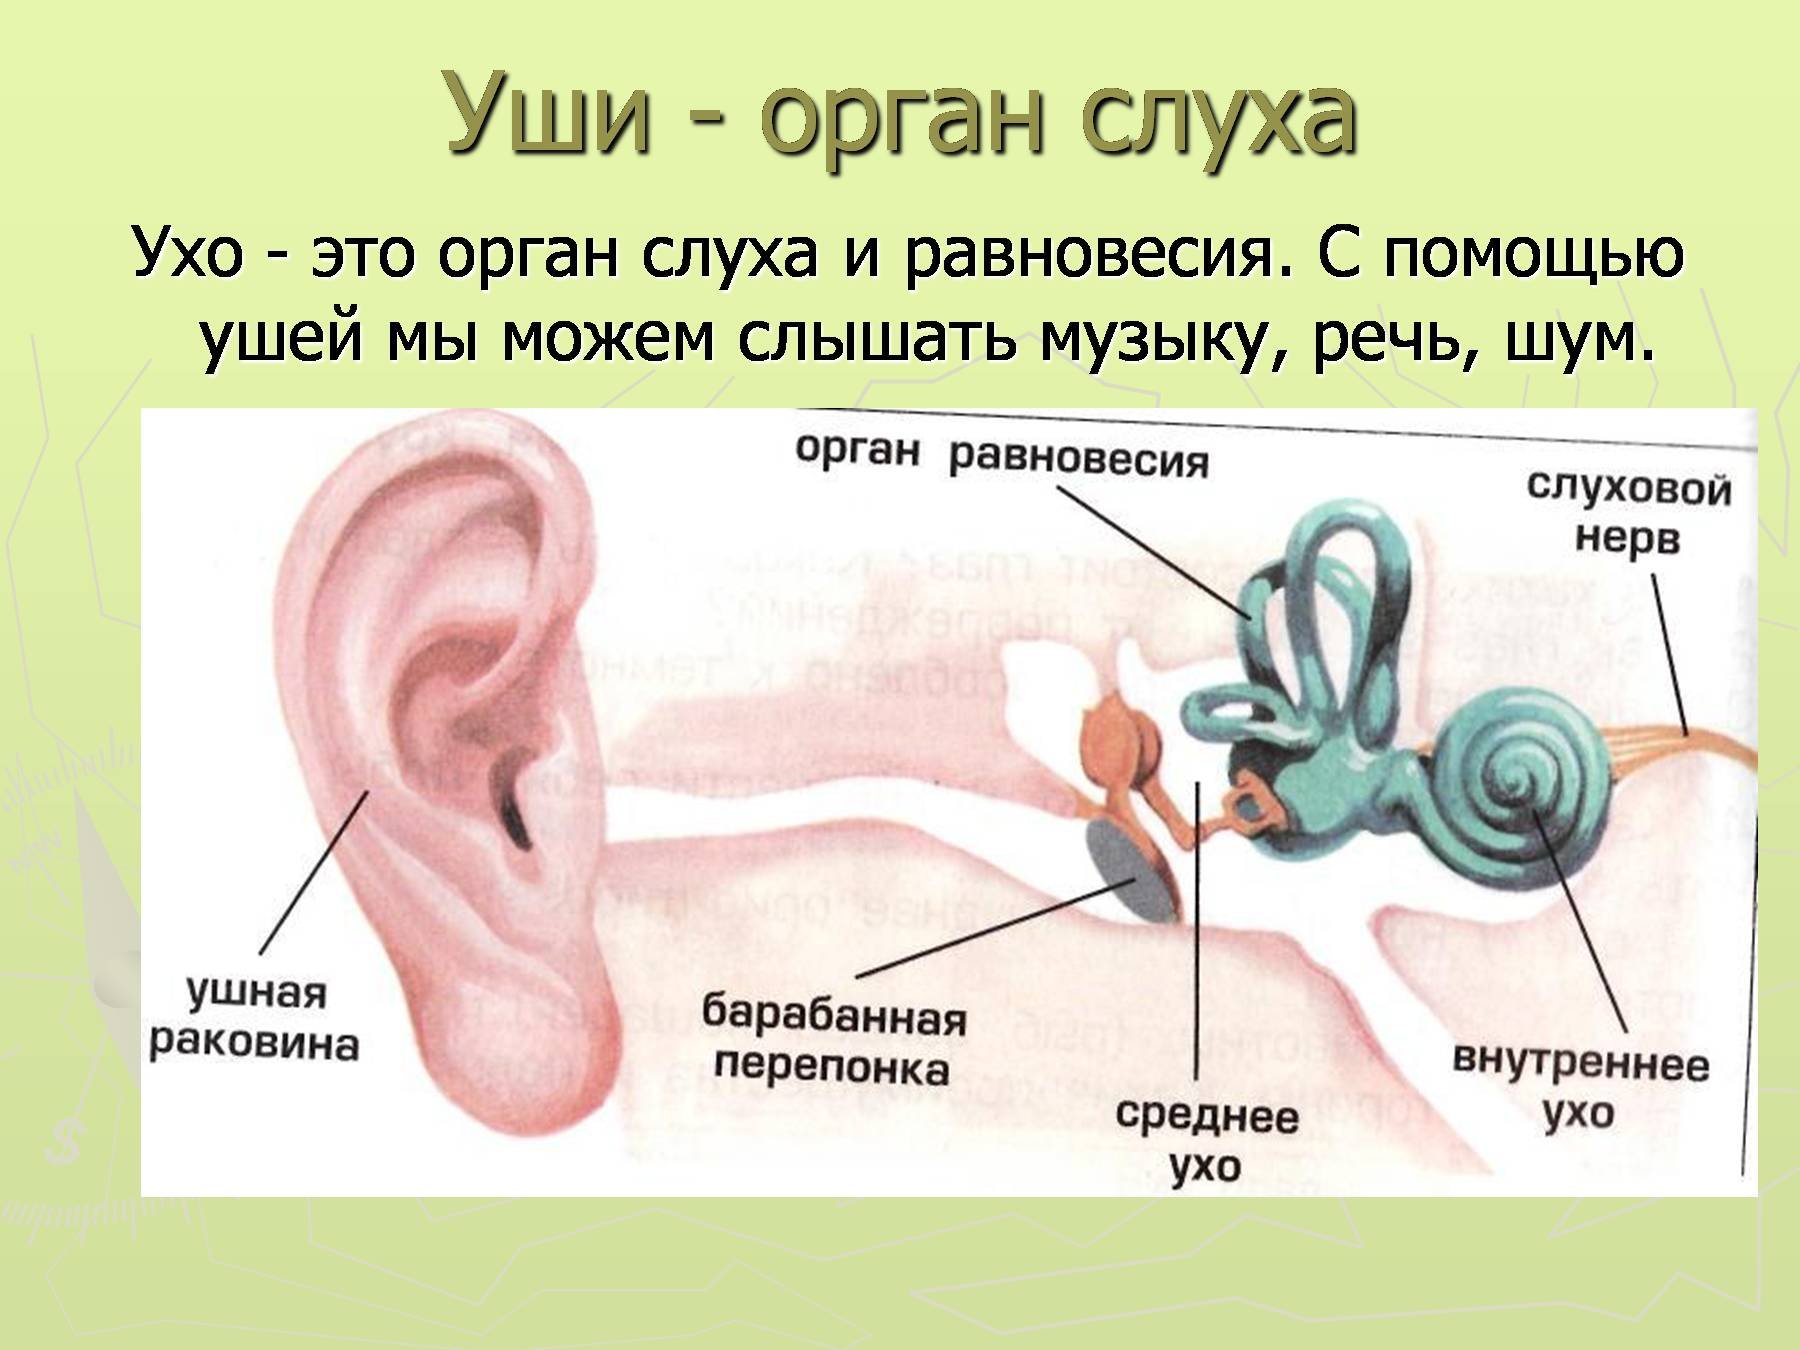 Органом слуха человека является. Уши орган слуха 3 класс окружающий мир. Органы слуха человека 3 класс окружающий мир. Картинка строение уха человека для детей. Орган слуха доклад 3 класс окружающий мир.